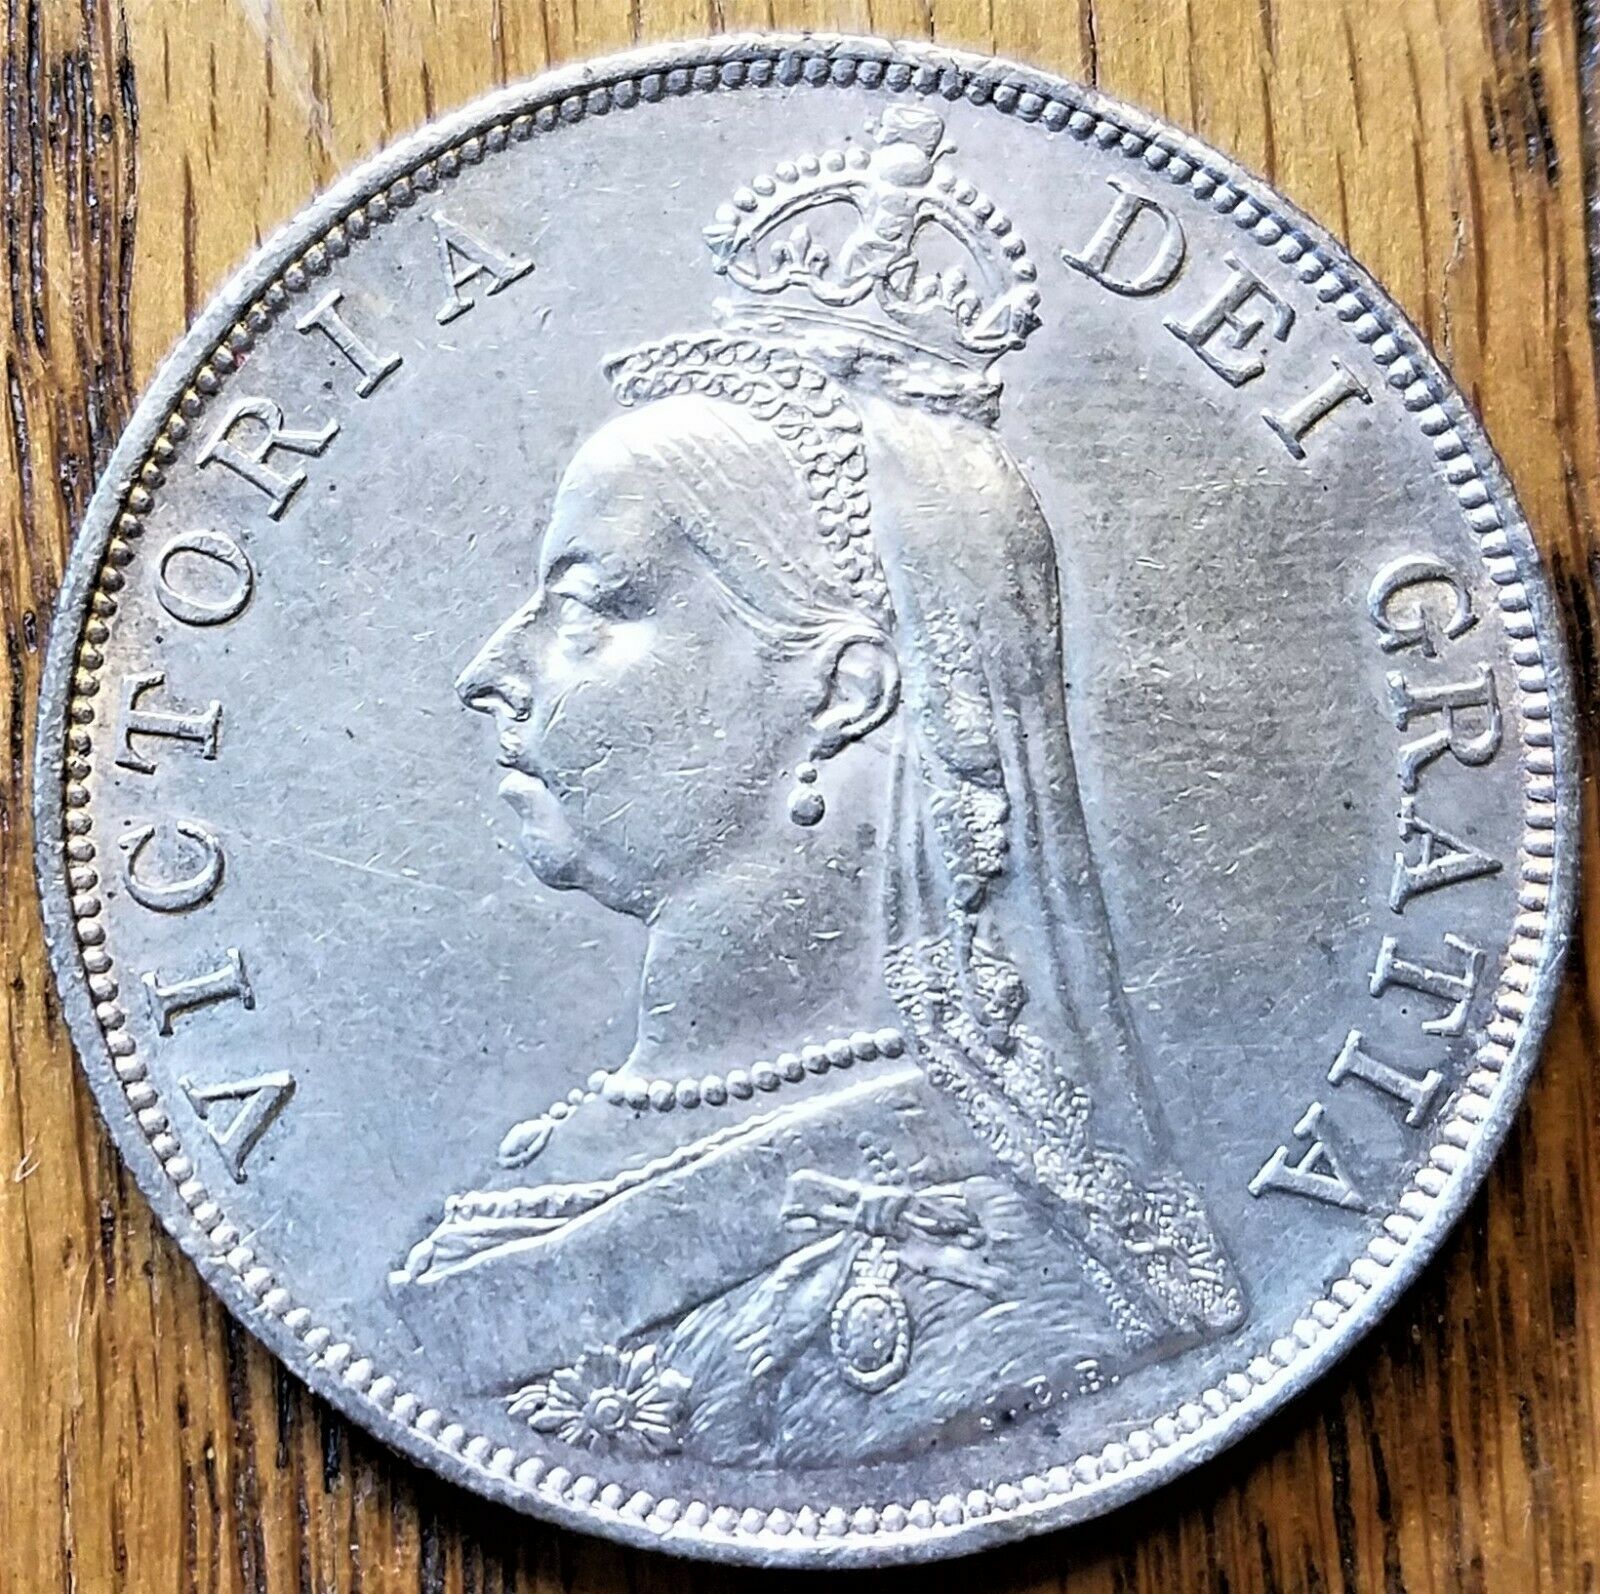 1887 Great Britain Double Florin Au Silver Coin - Jubilee Portrait - Arabic 1